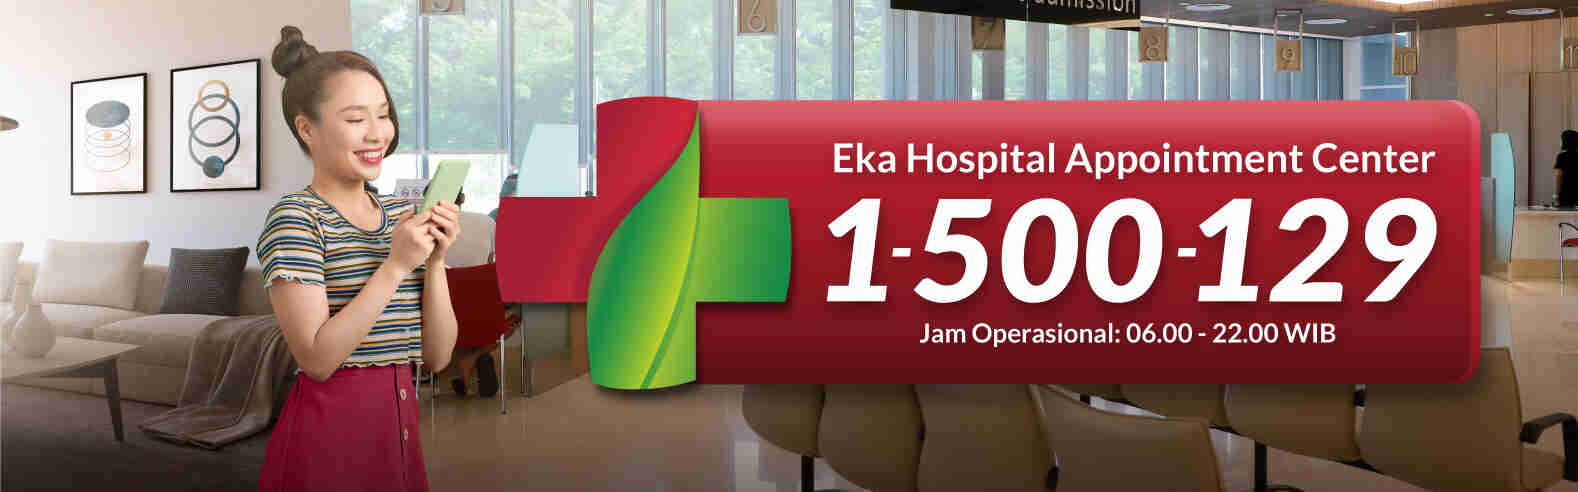 Appointment Center Eka Hospital